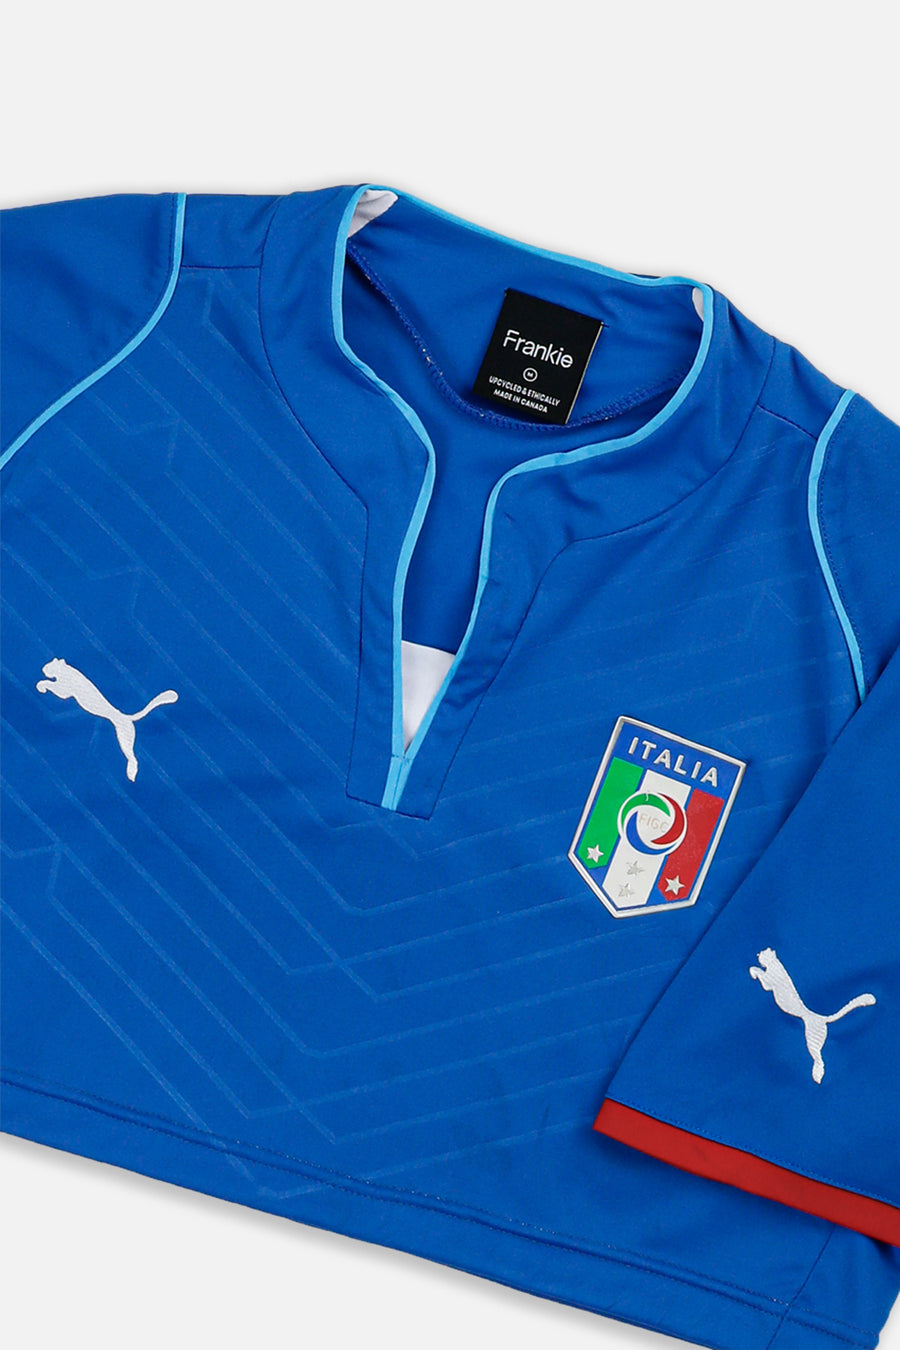 Rework Crop Italy Soccer Jersey - M